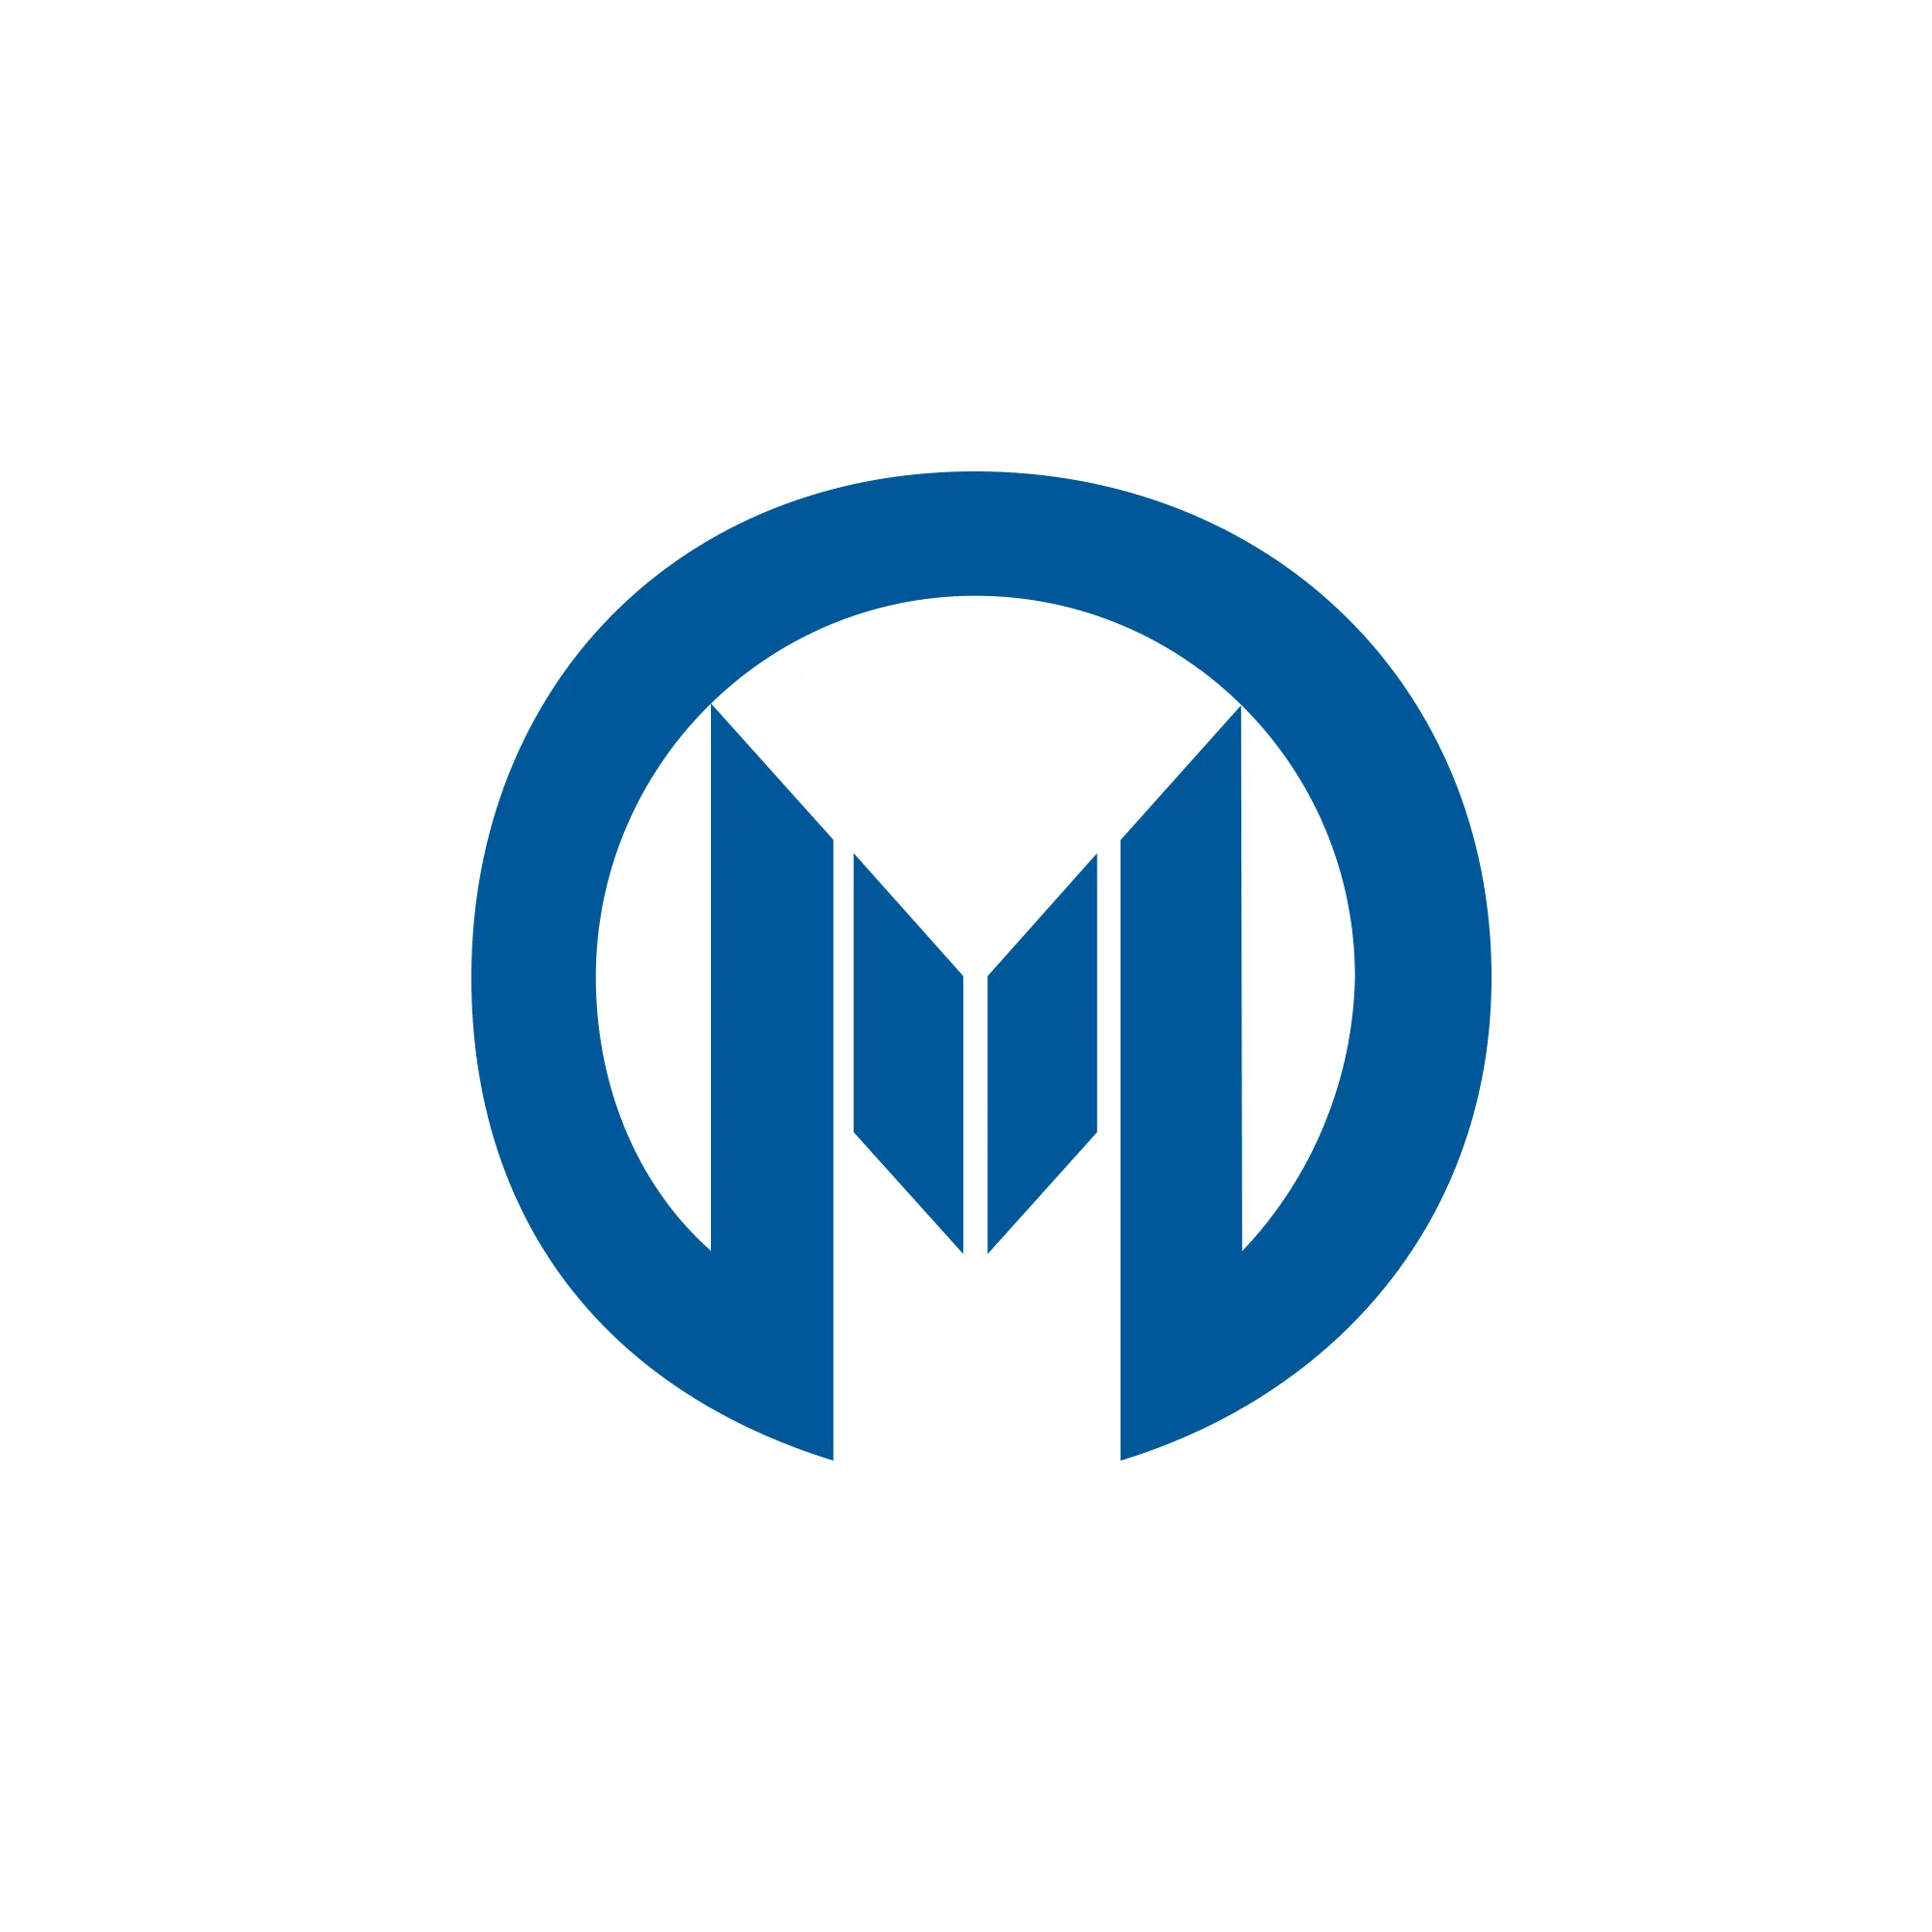 Moffitt Cancer Center's logo